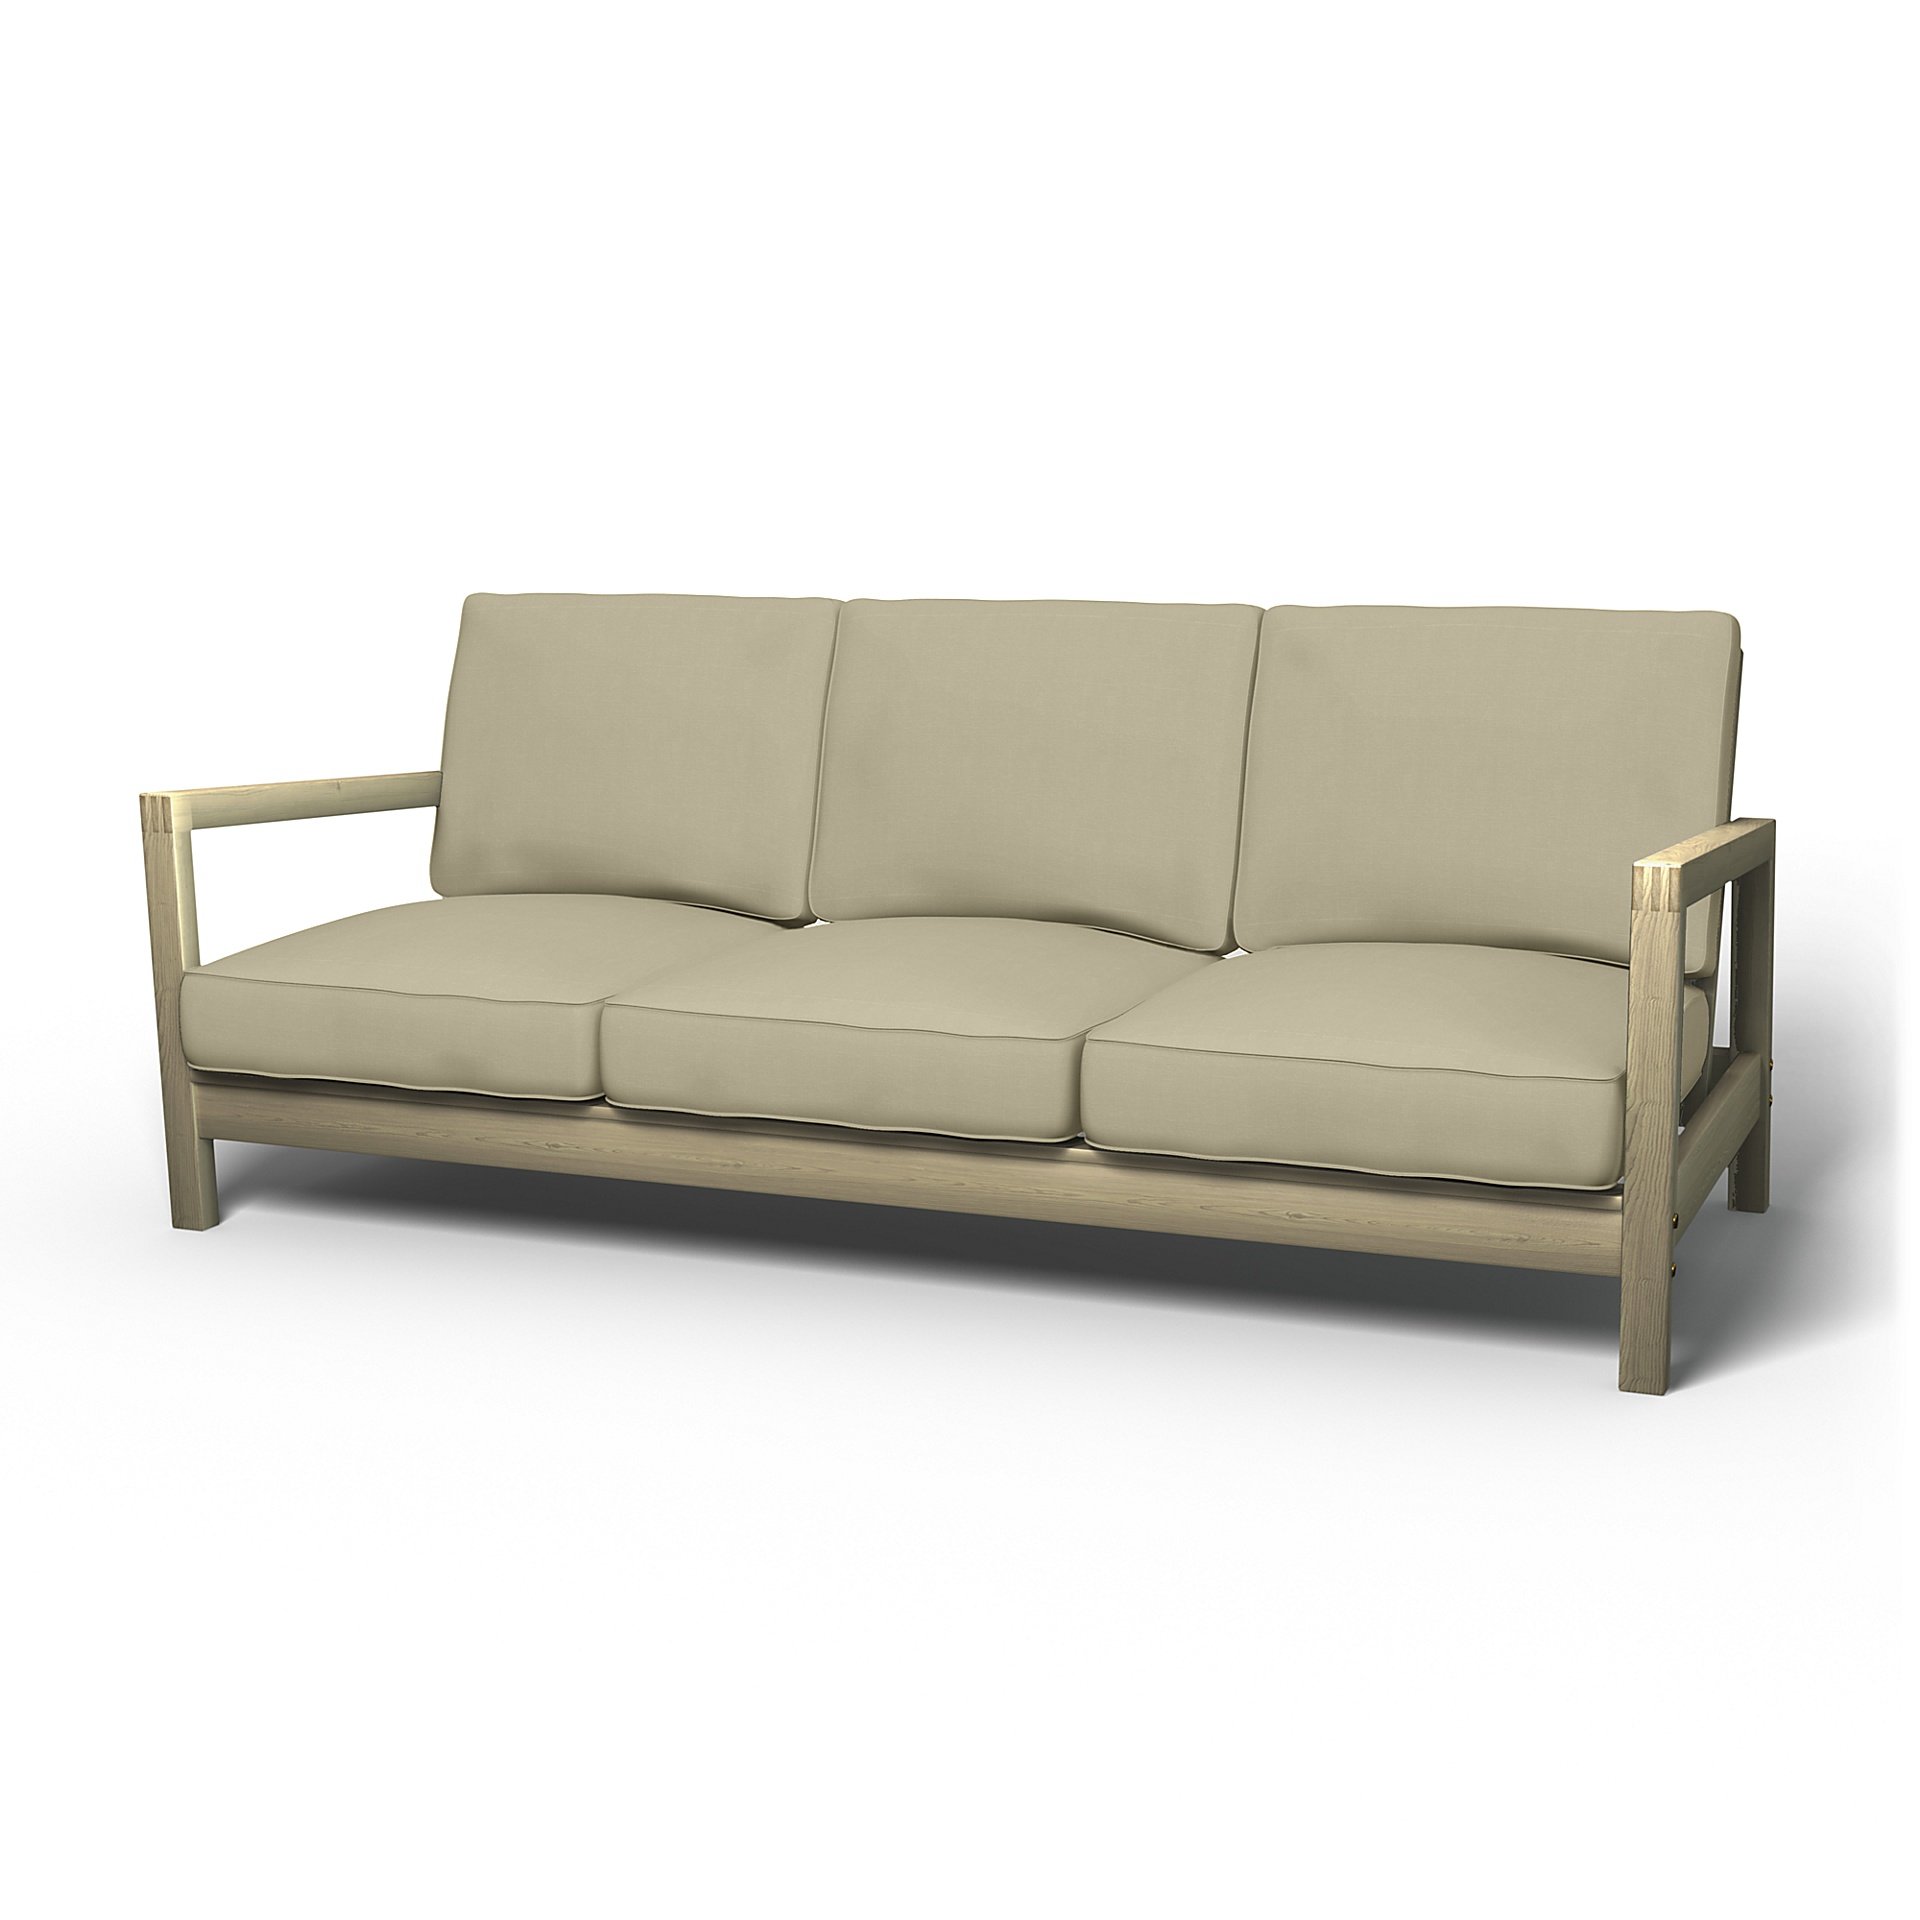 IKEA - Lillberg 3 Seater Sofa Cover, Sand Beige, Cotton - Bemz